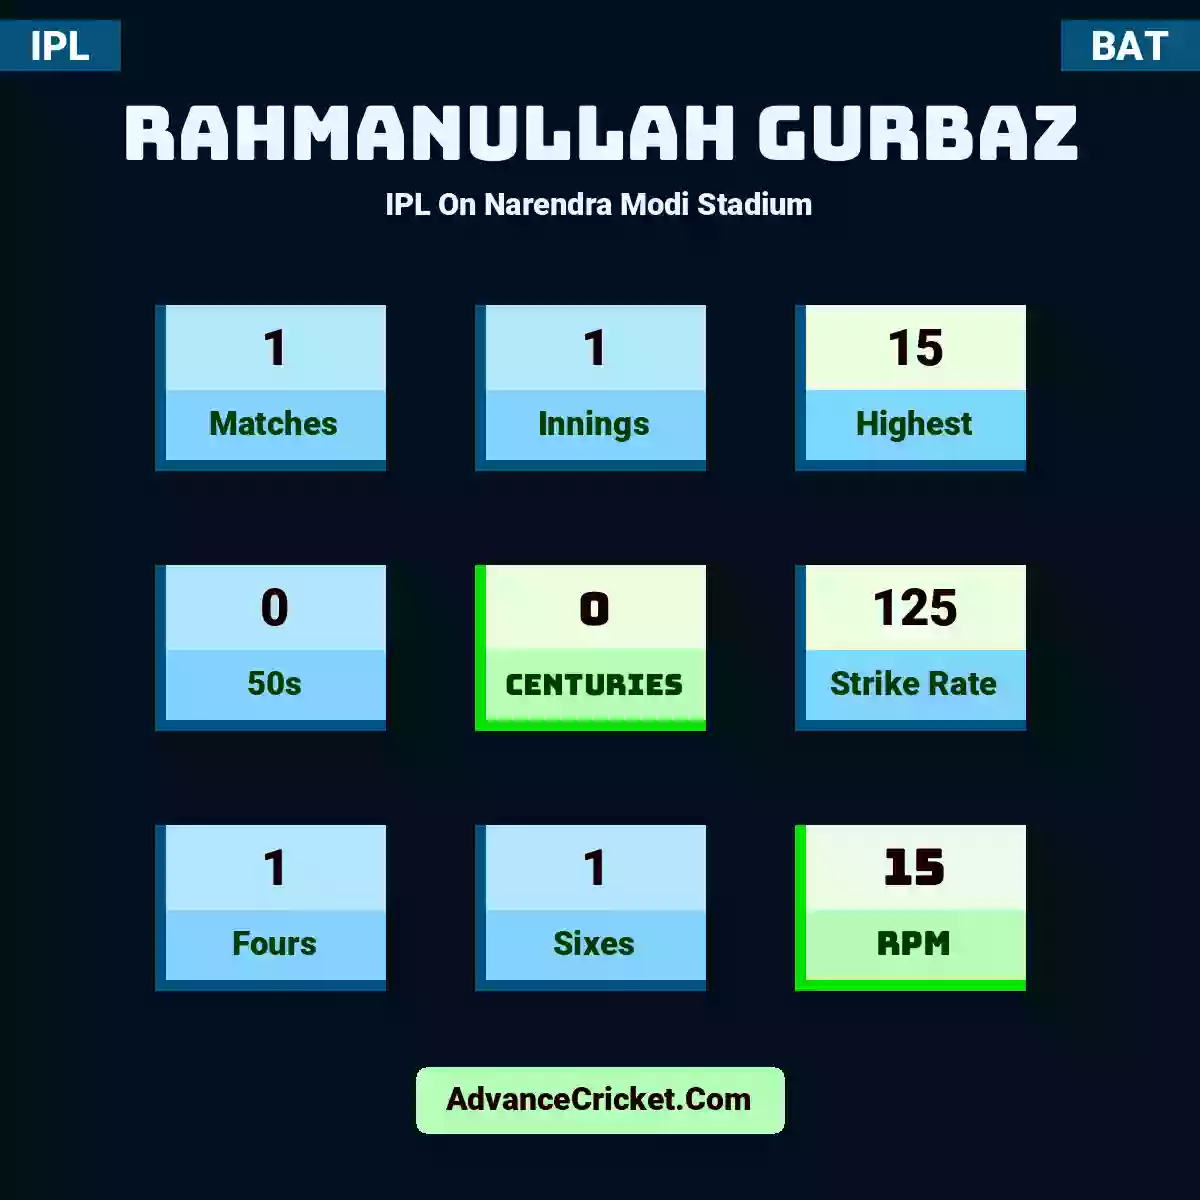 Rahmanullah Gurbaz IPL  On Narendra Modi Stadium, Rahmanullah Gurbaz played 1 matches, scored 15 runs as highest, 0 half-centuries, and 0 centuries, with a strike rate of 125. R.Gurbaz hit 1 fours and 1 sixes, with an RPM of 15.